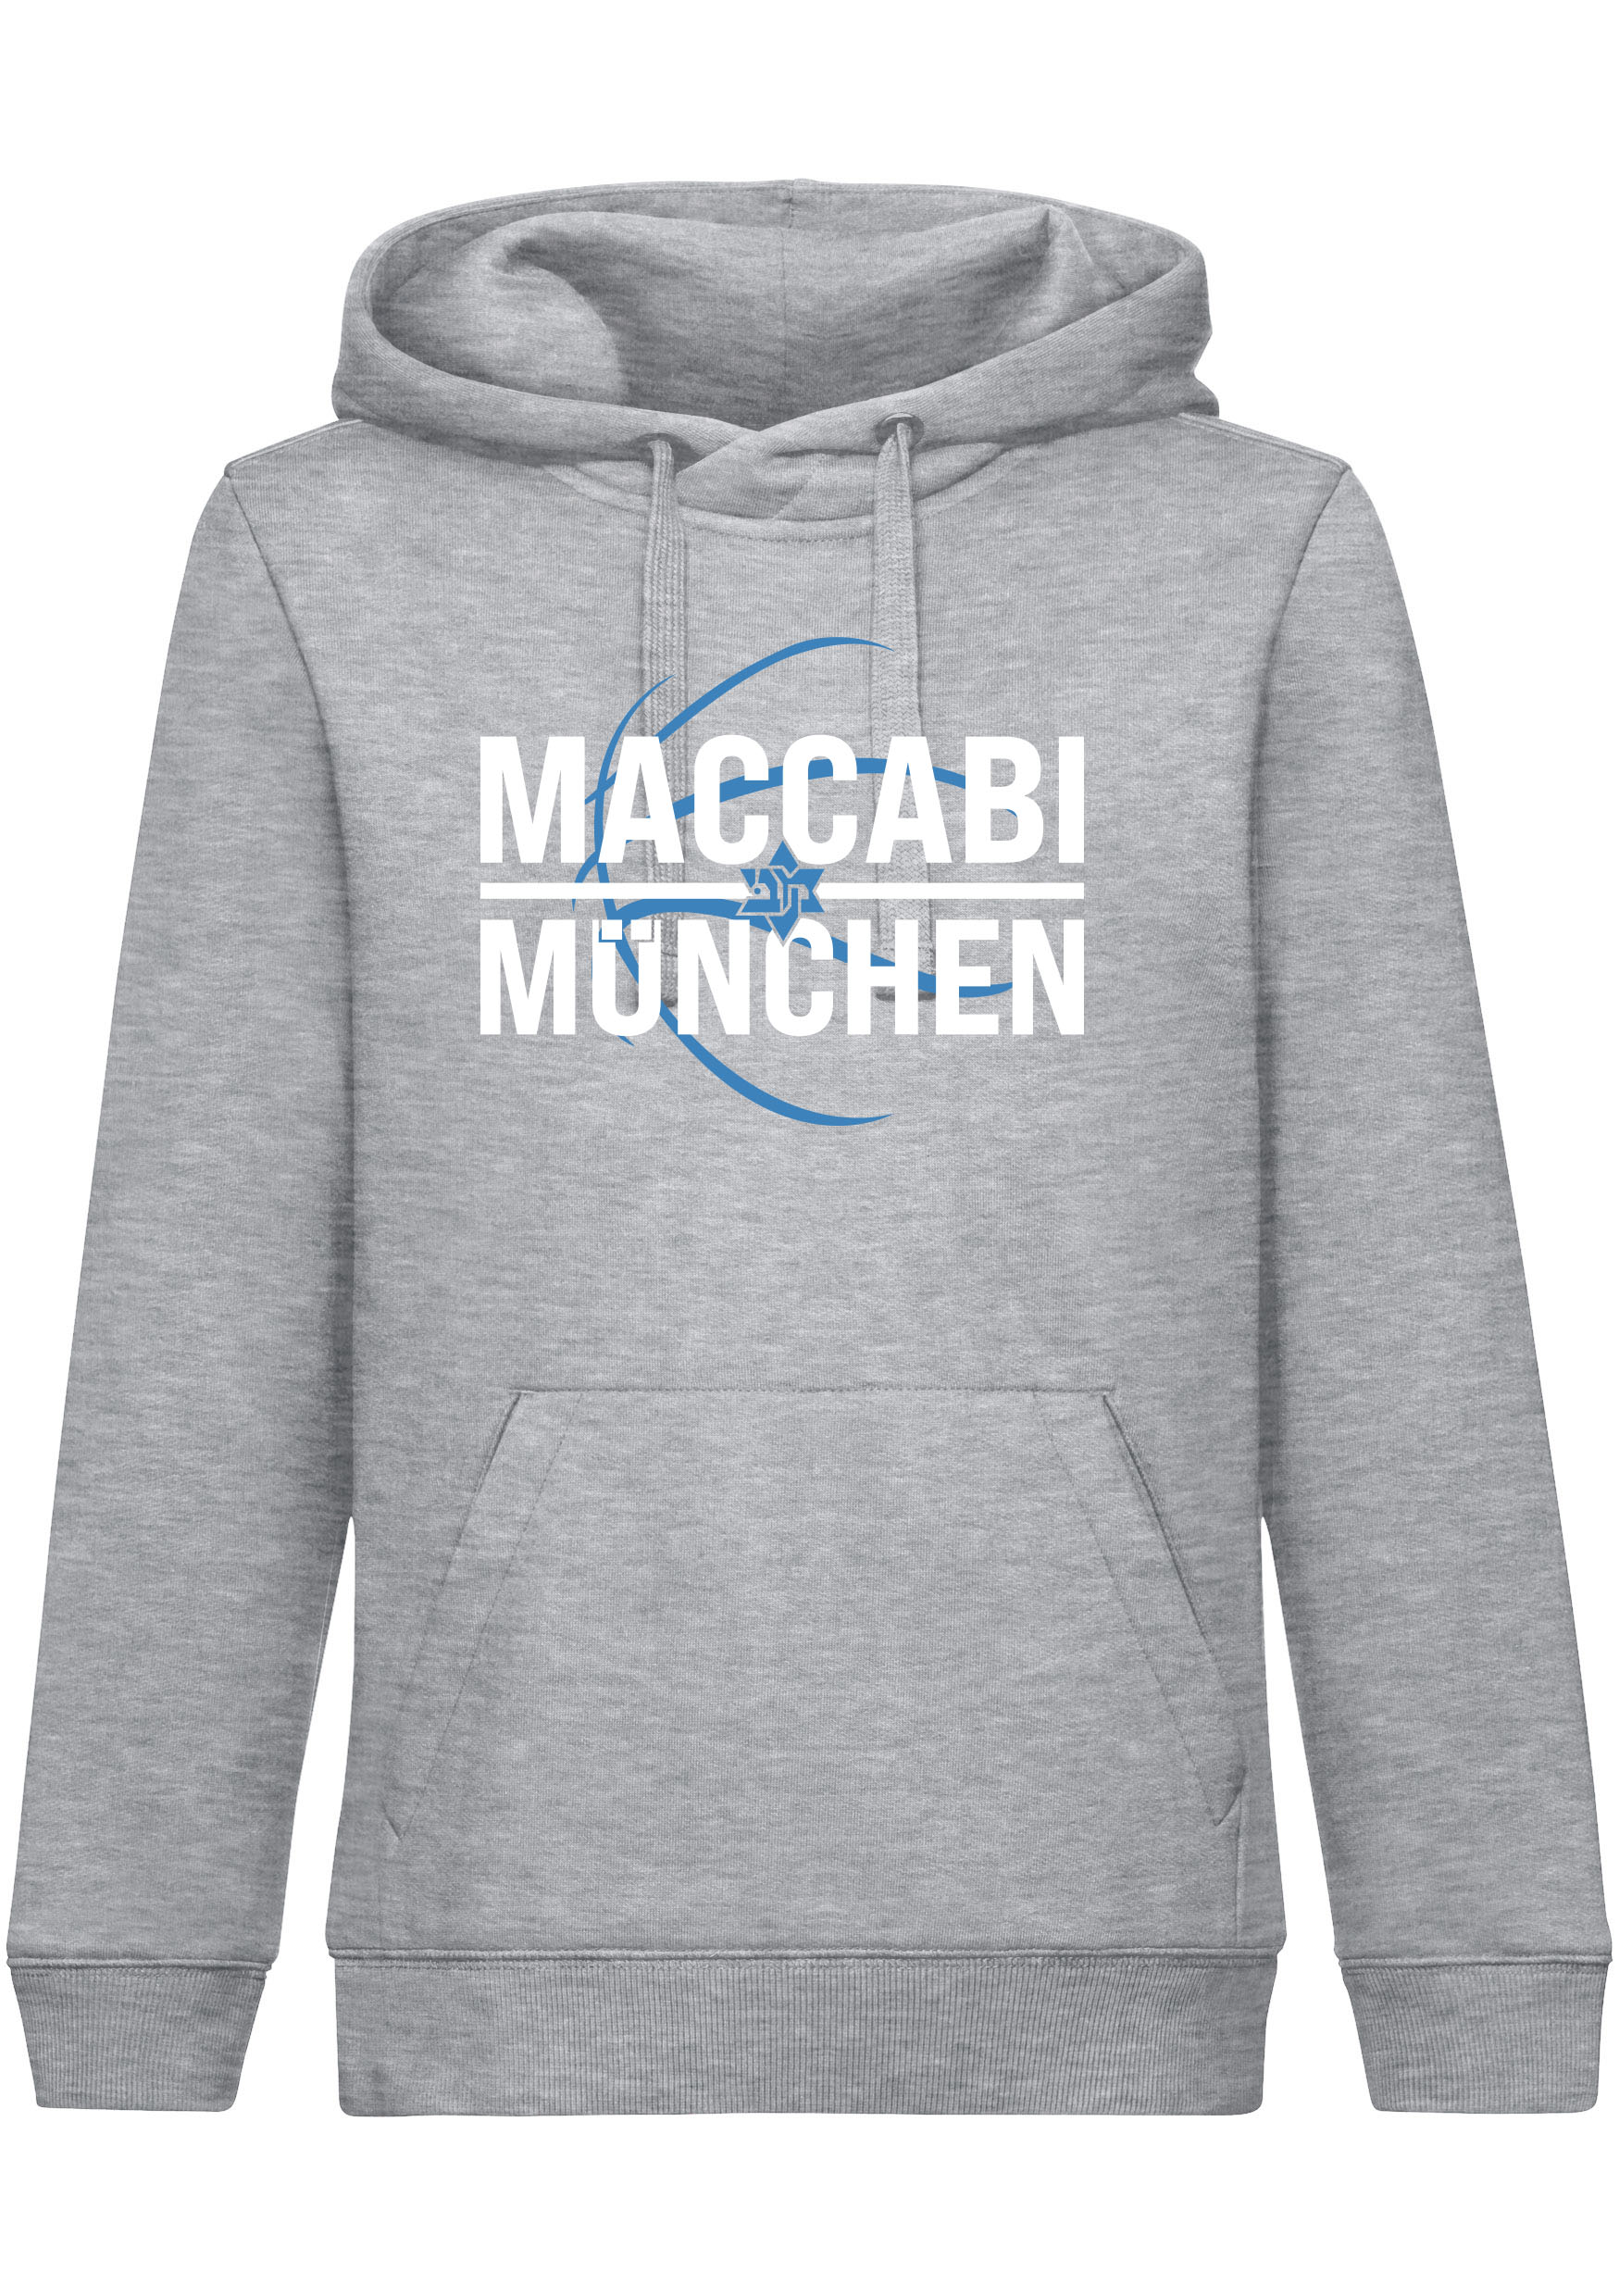 Maccabi München Hoodie Kids grau